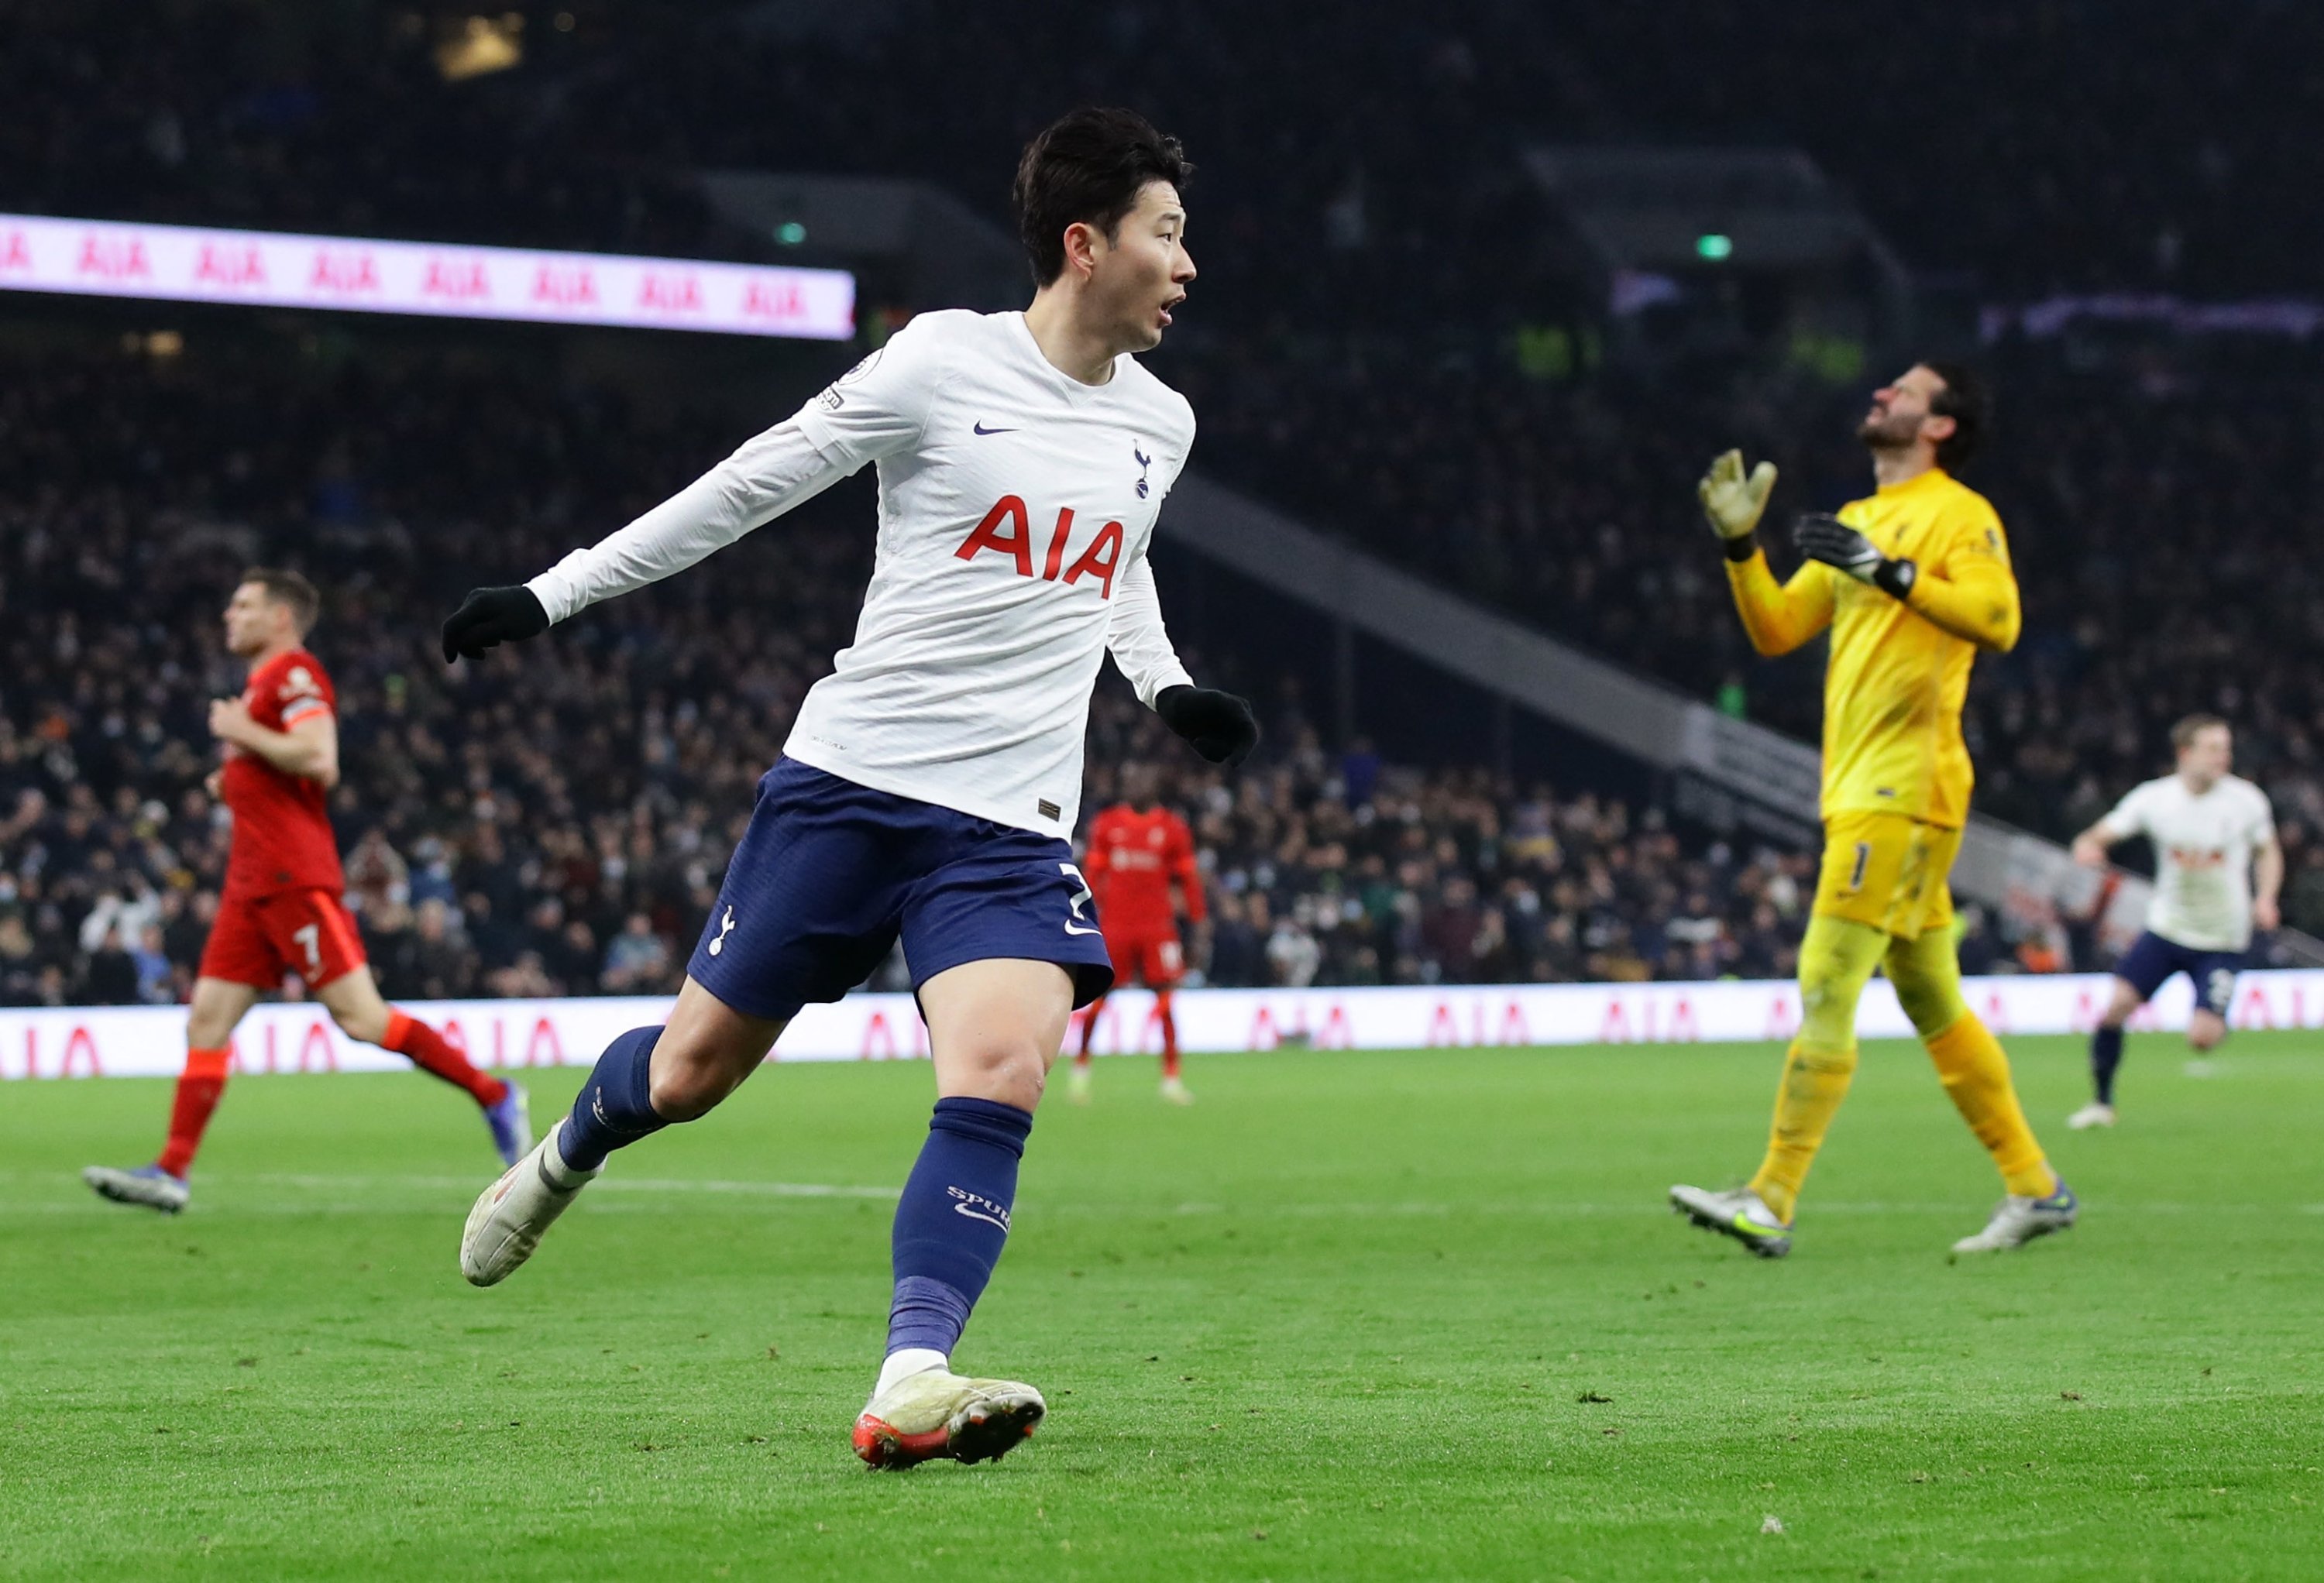  Tottenham Hotspur's Son Heung-min celebrates scoring in a Premier League game against Liverpool, London, England, Dec. 19, 2021. (Reuters Photo)